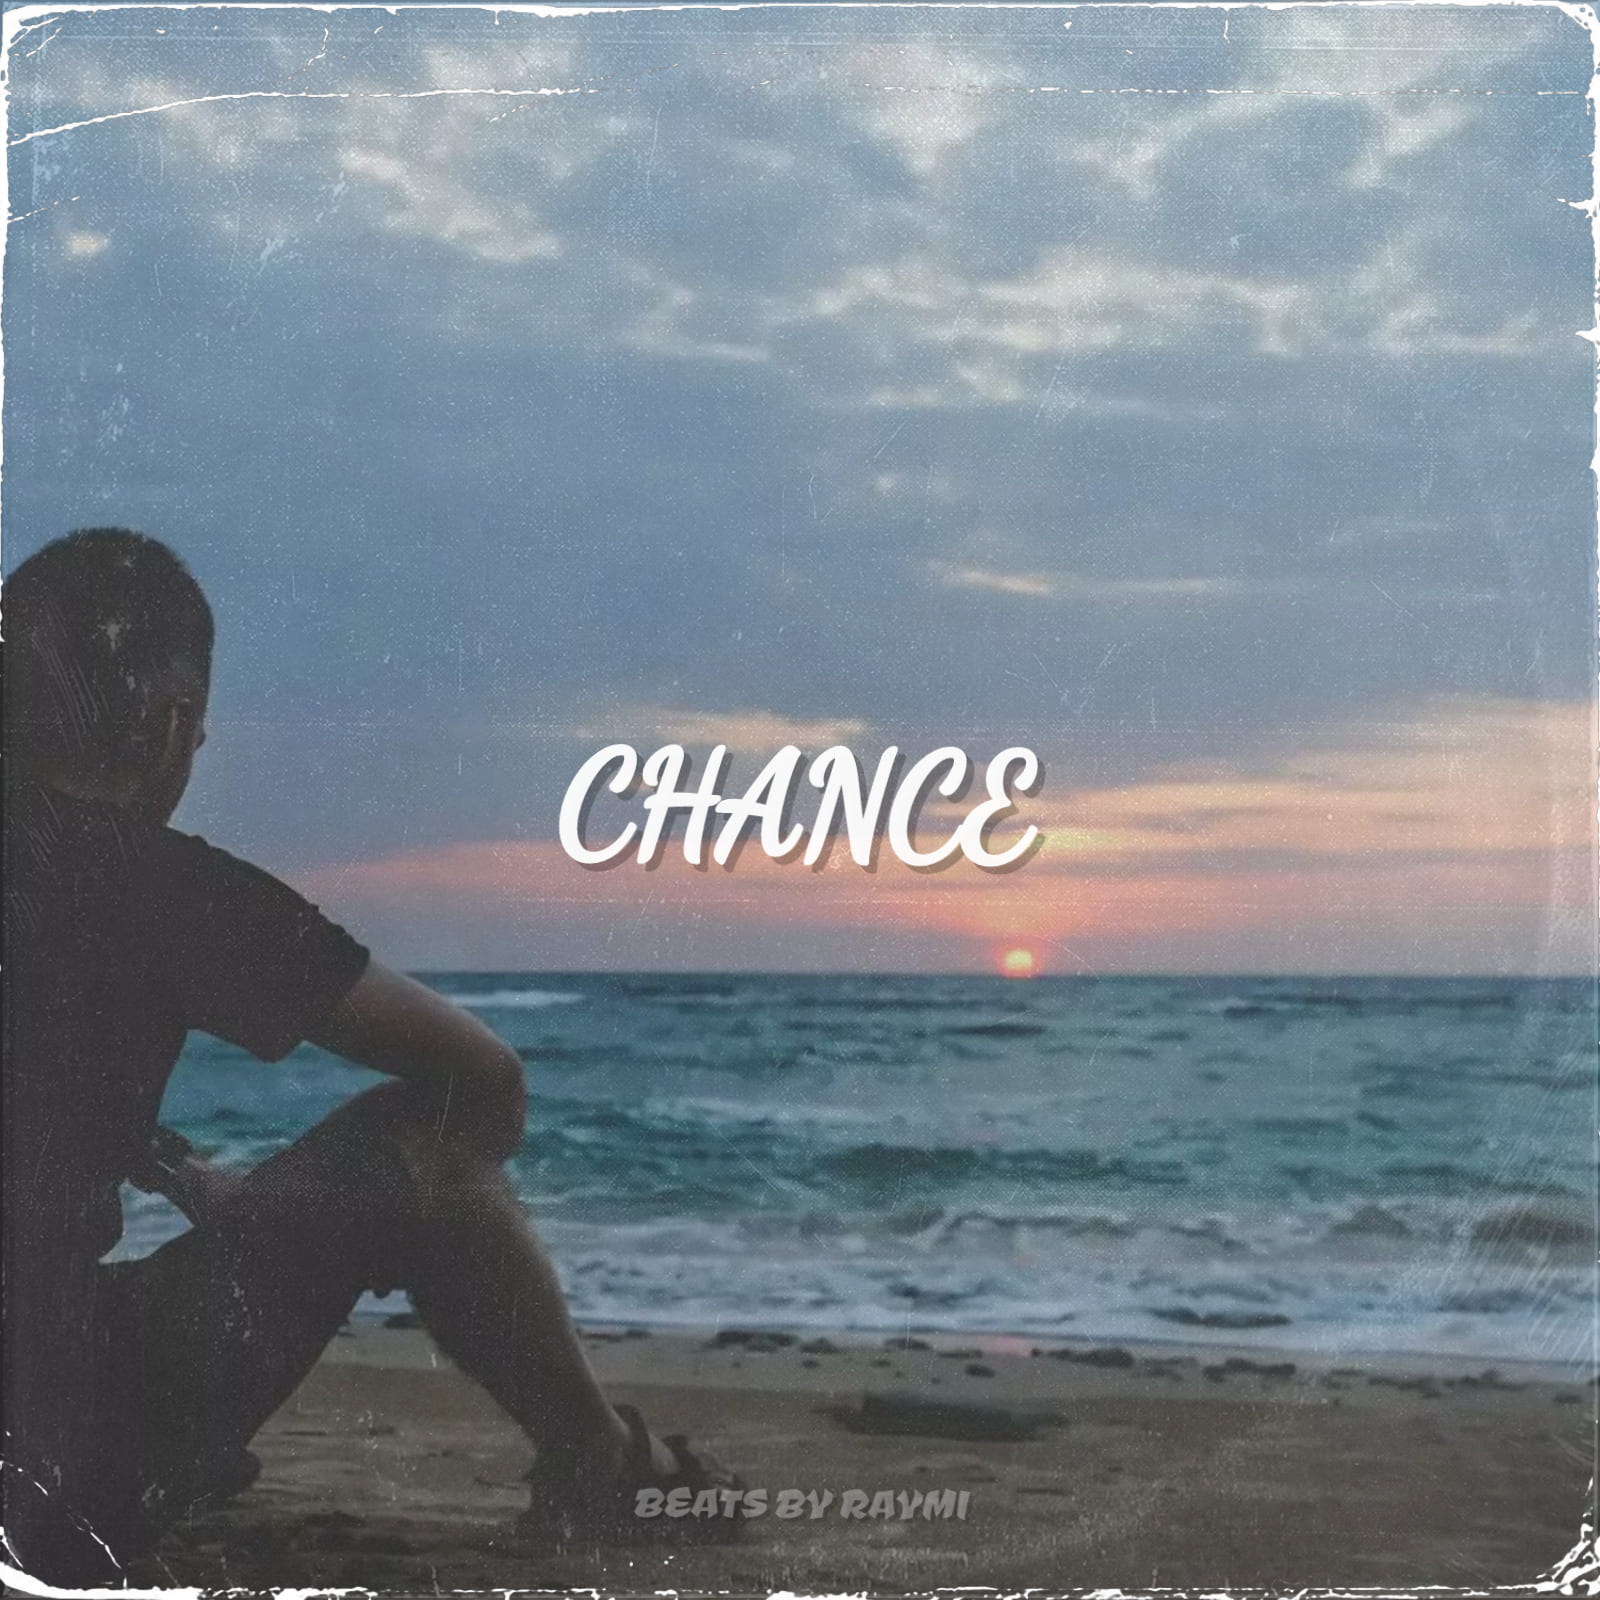 обложка бита, Raymi, музыка, cover, Chance (красивый, нежный бит)